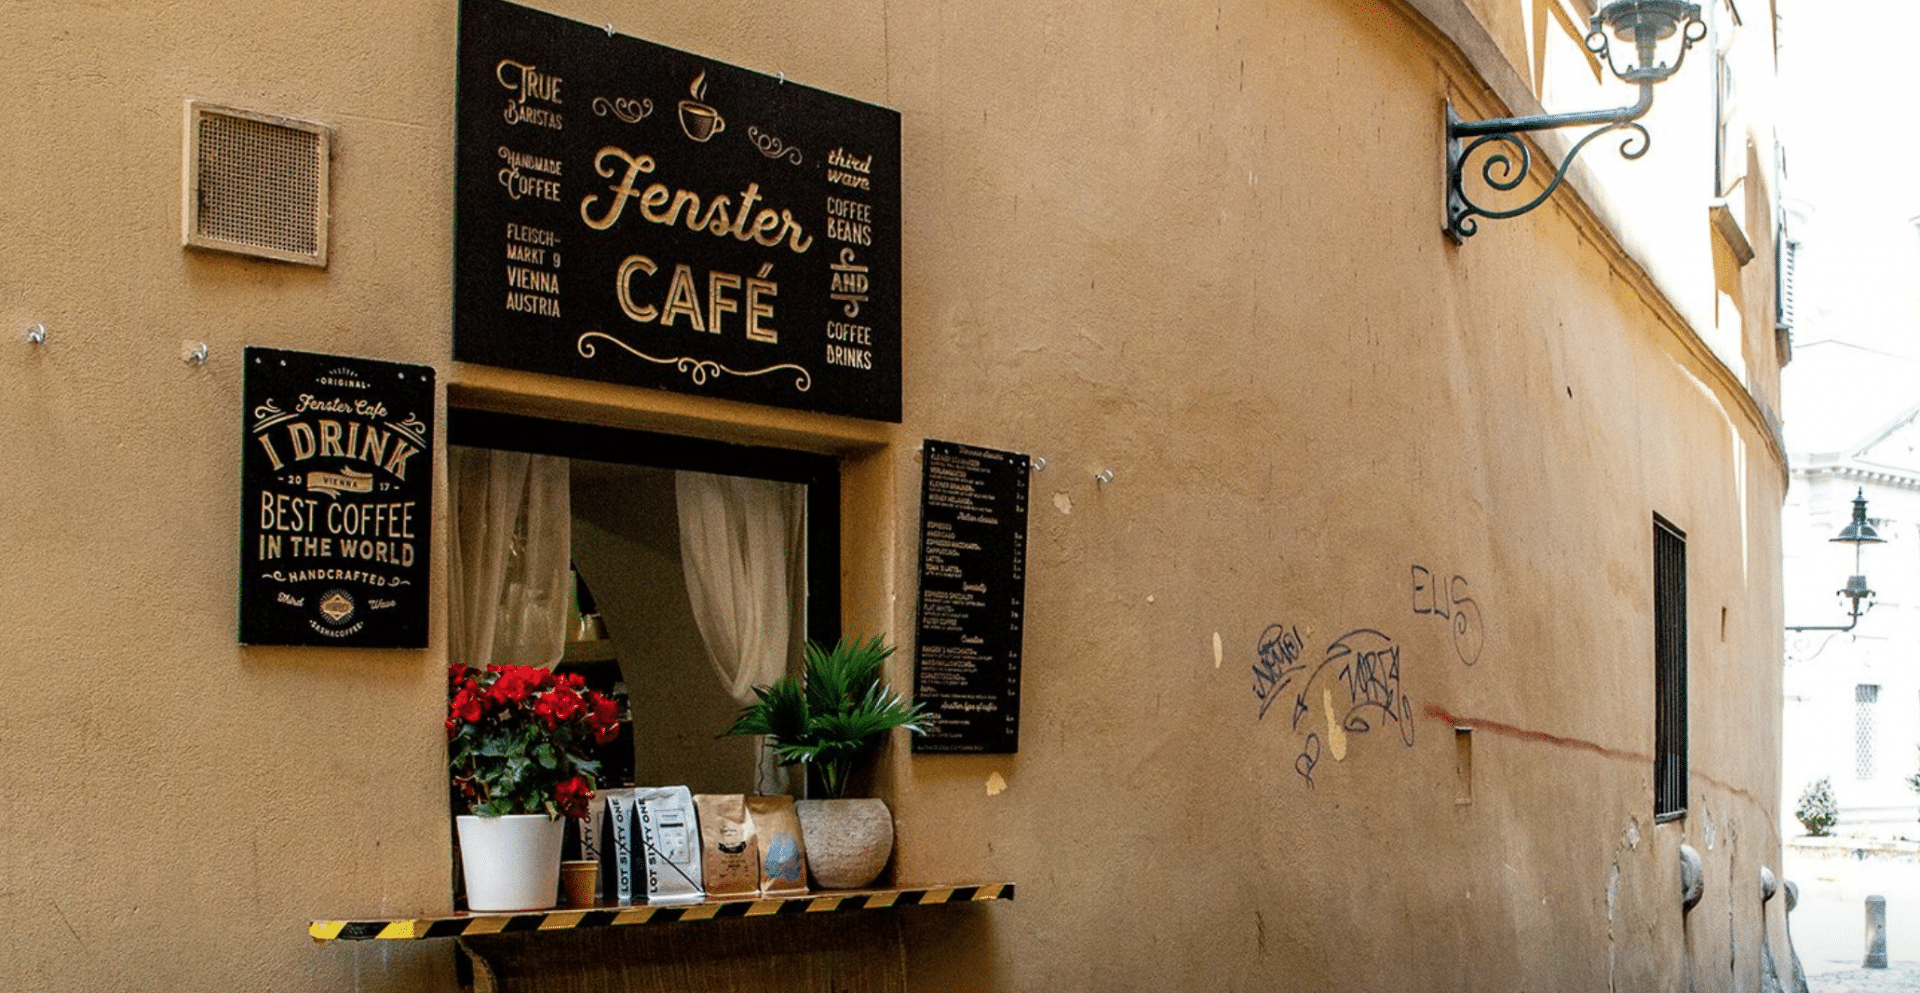 Fenster Cafe in Europe